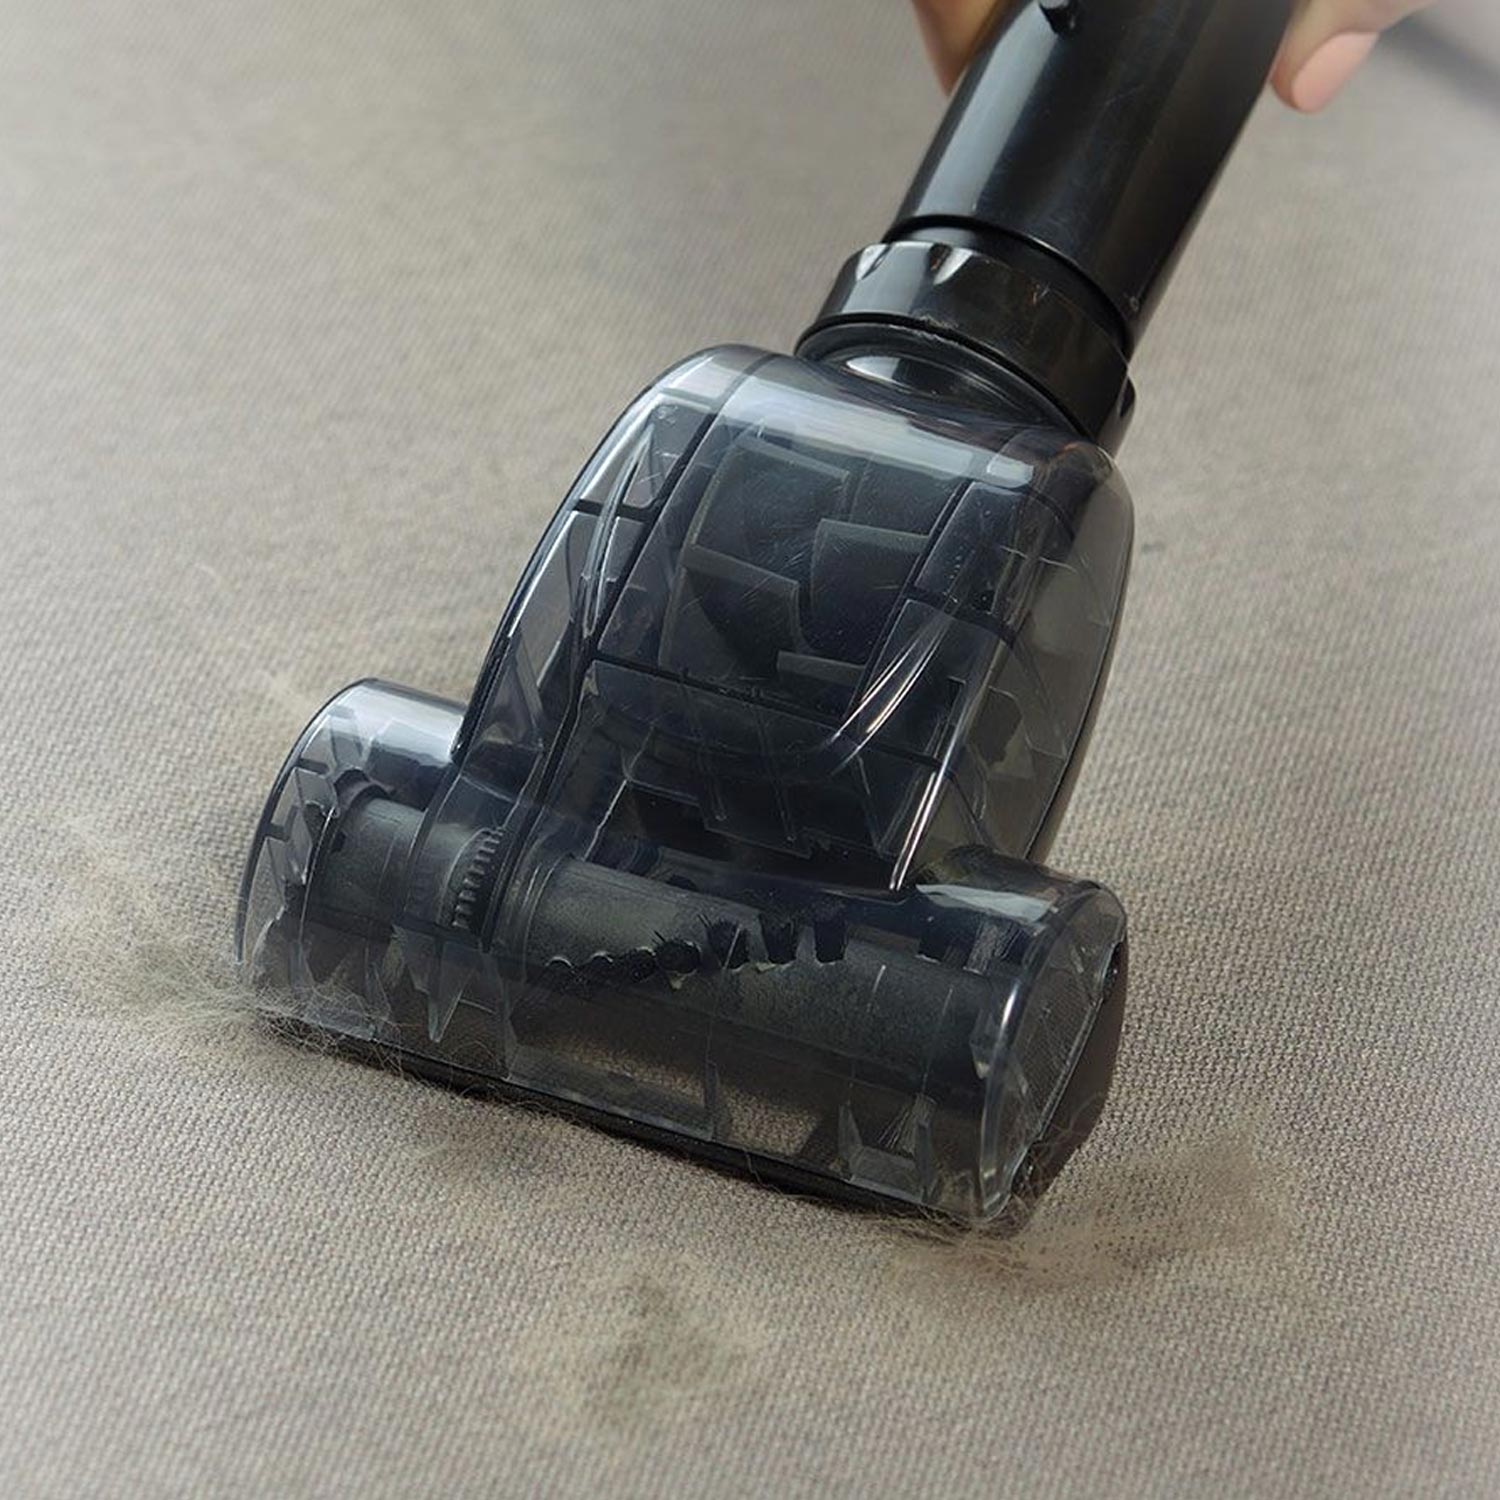 Eureka Brushroll Clean with SuctionSeal Bagless Vacuum